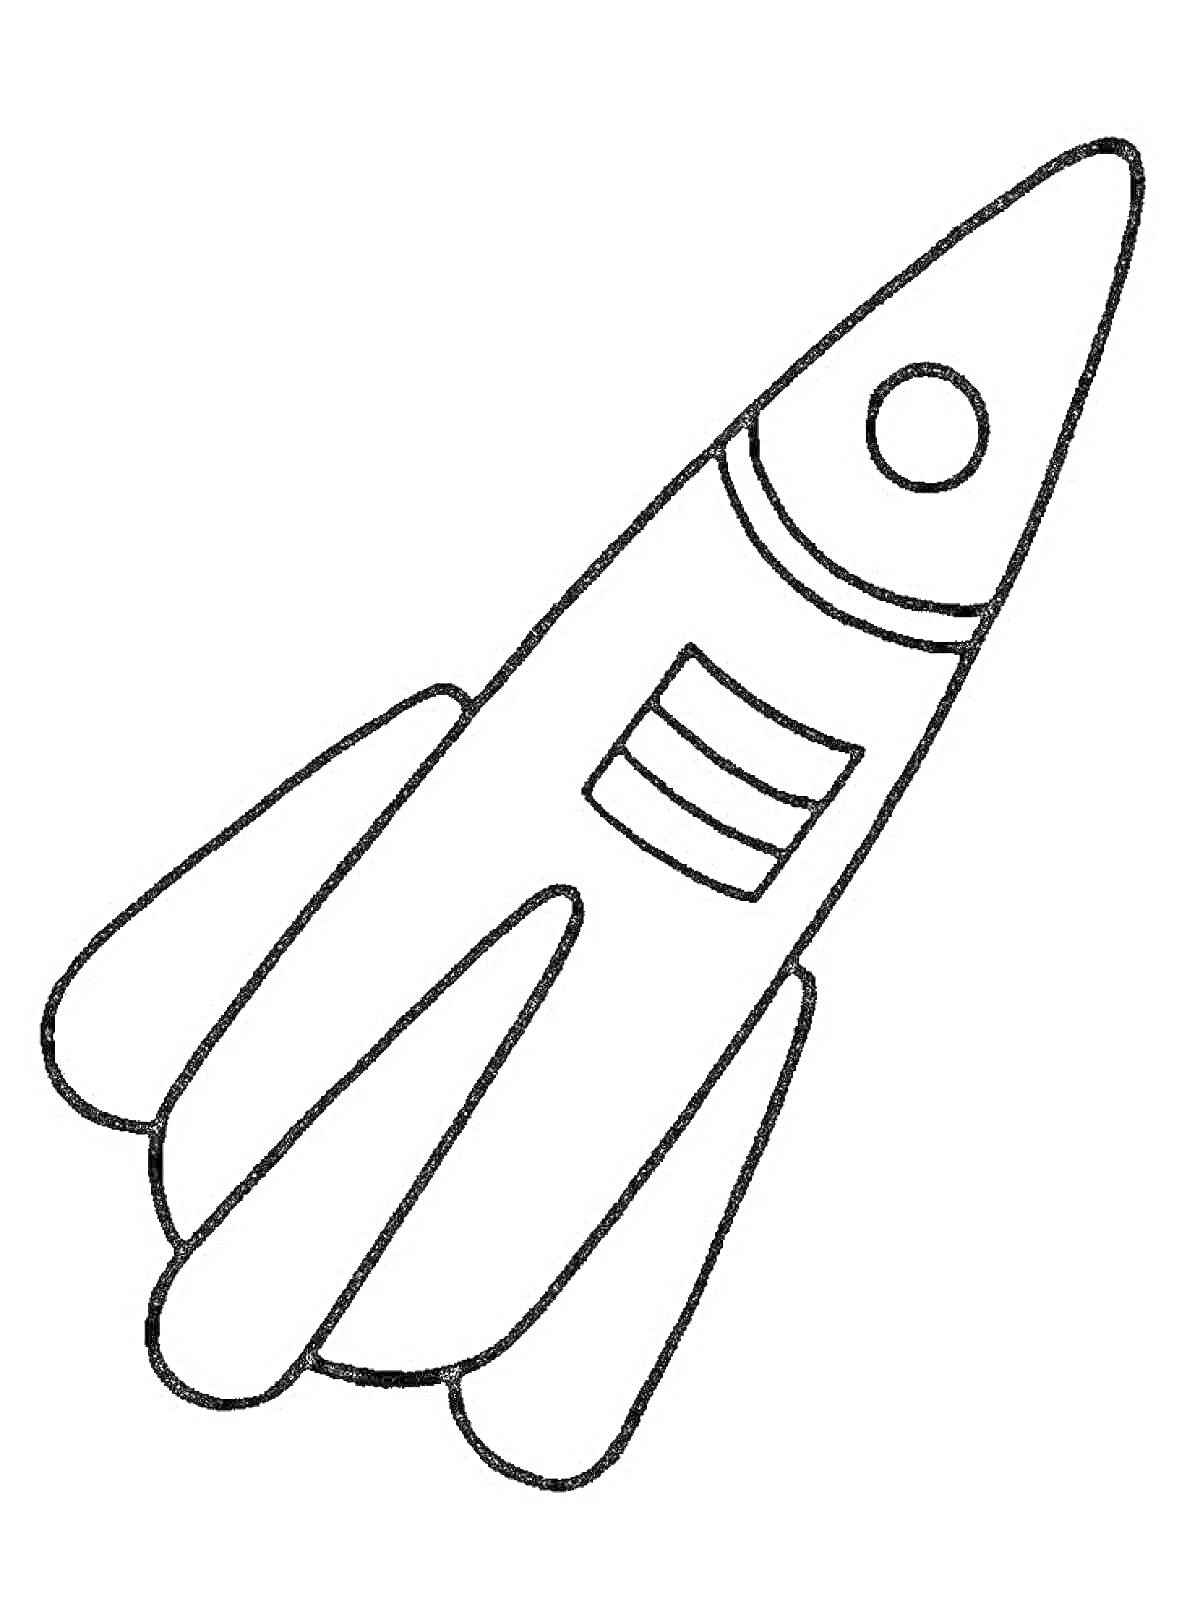 Раскраска Ракета с двумя стабилизаторами и иллюминатором